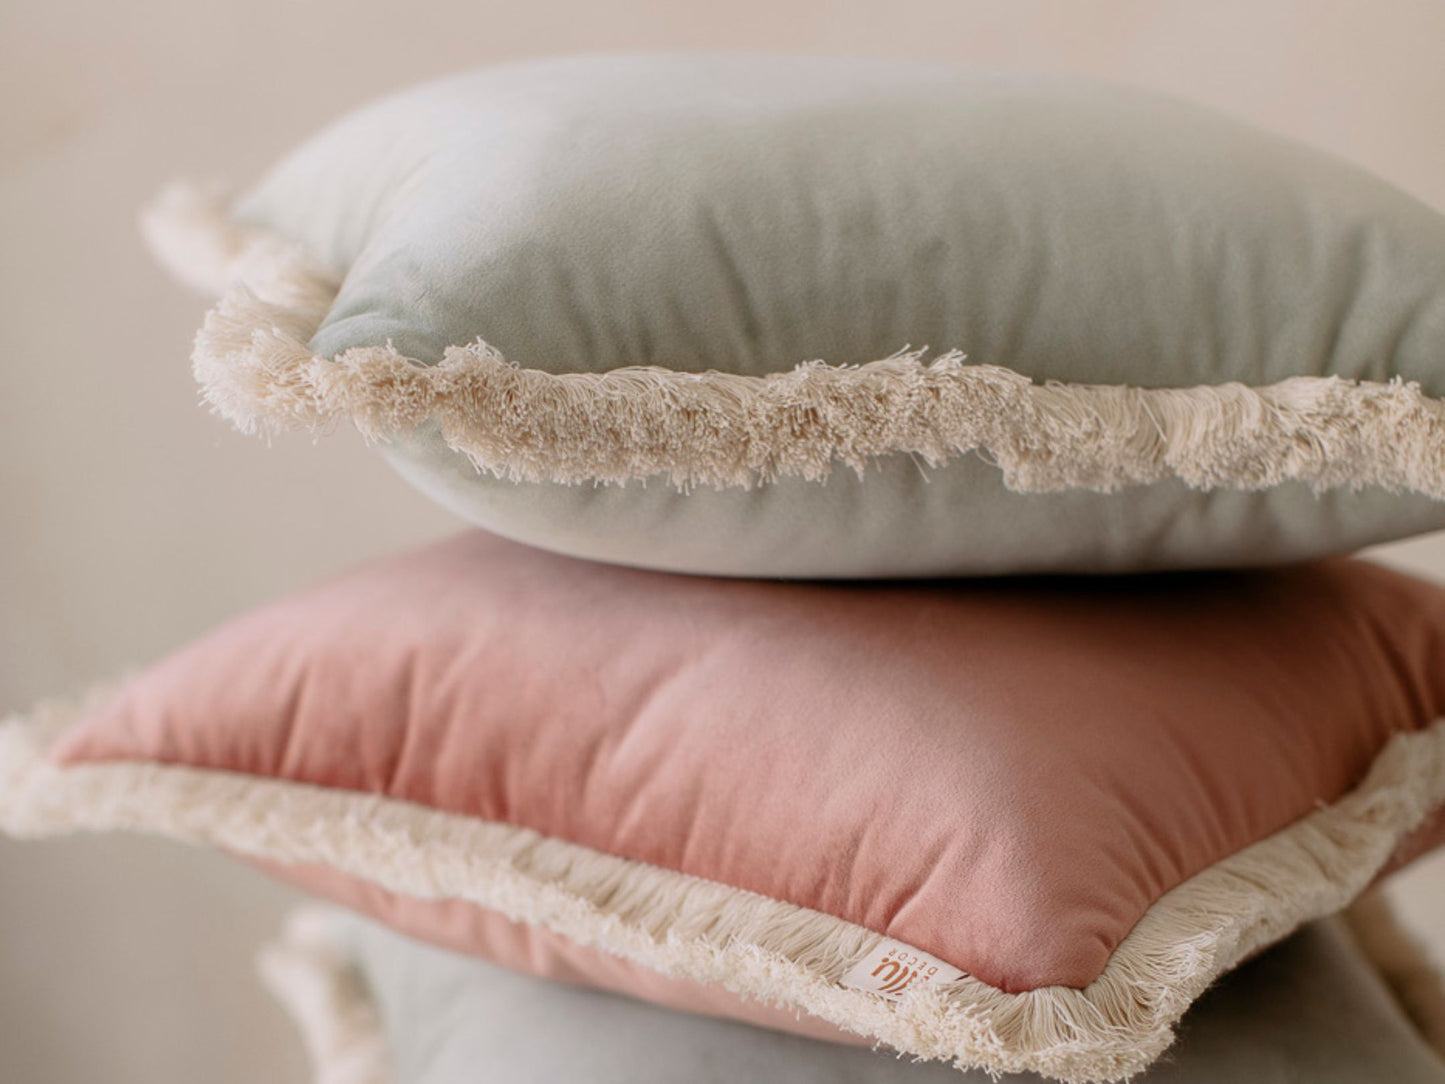 Pastel Eucalyptus Velvet Throw Pillow, Decorative Square Cushion with Cotton Fringe.